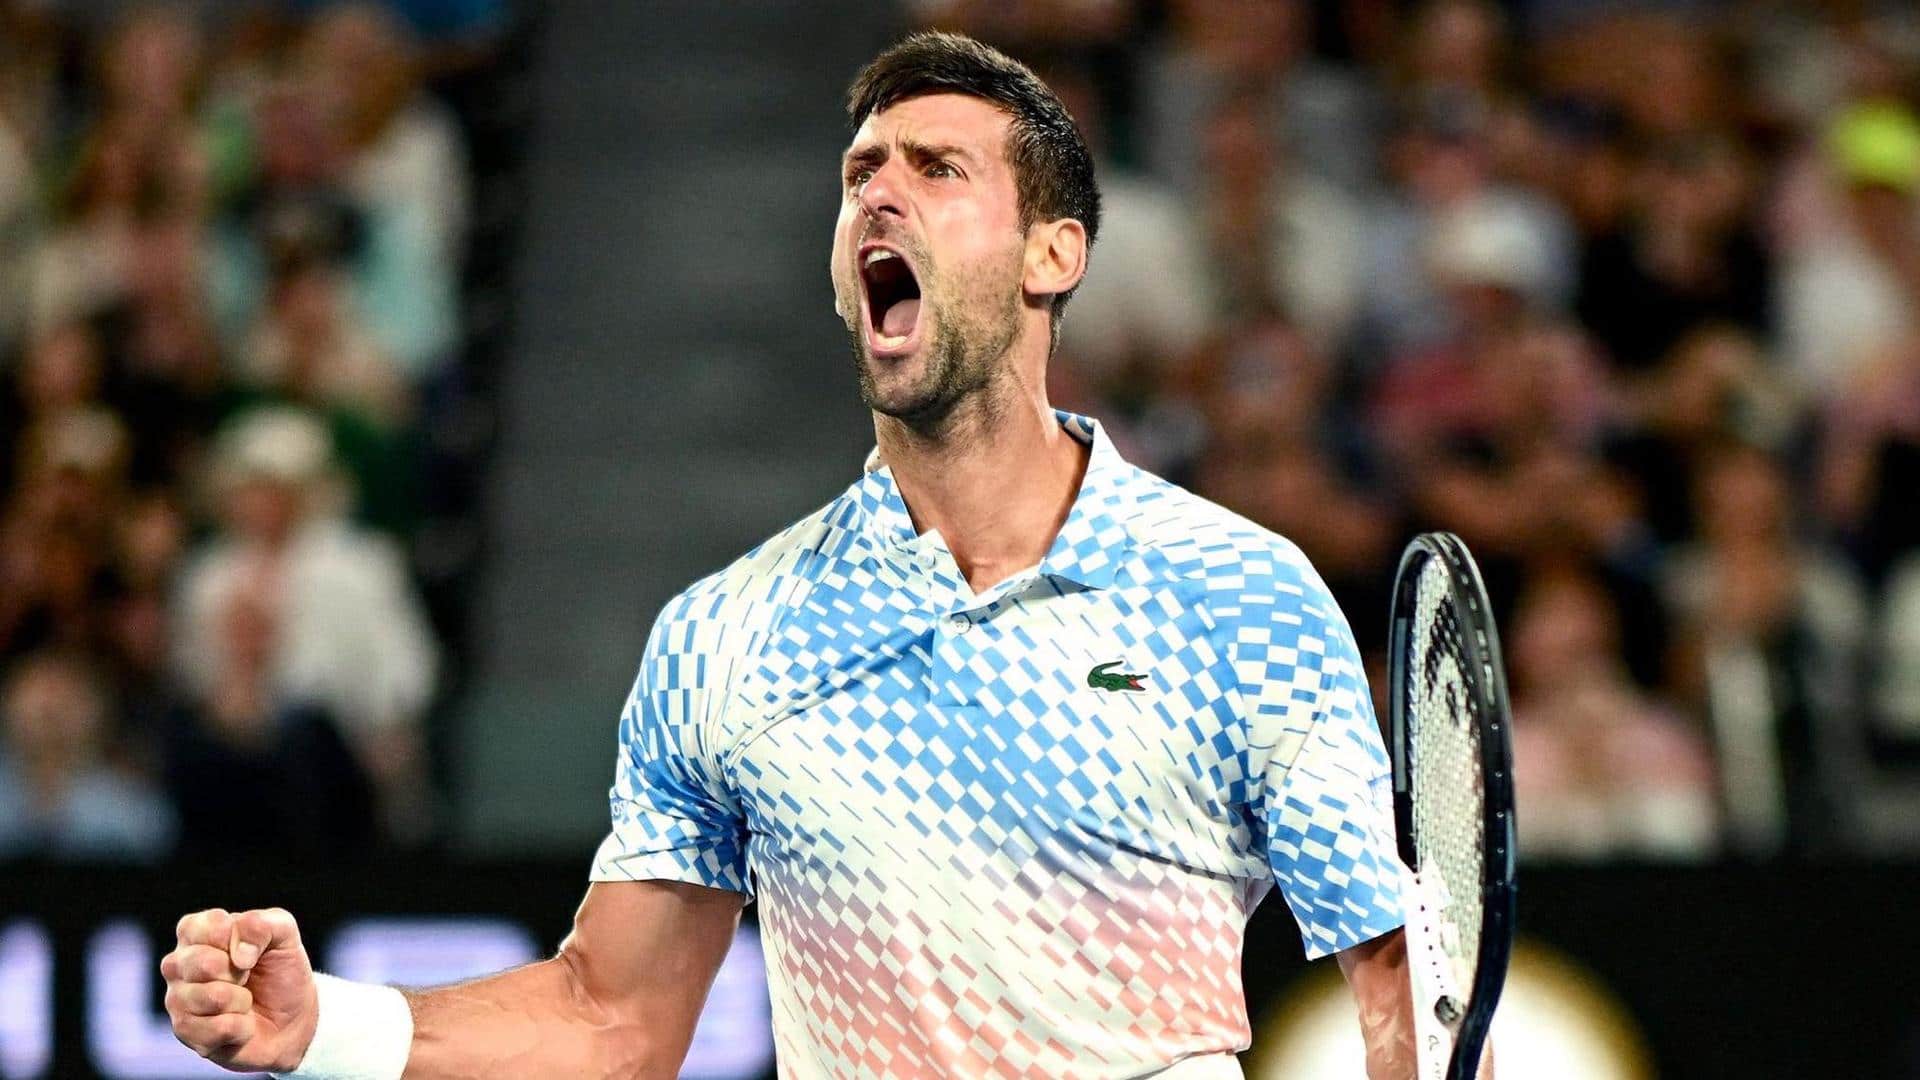 2023 French Open, Novak Djokovic reaches third round: Key stats